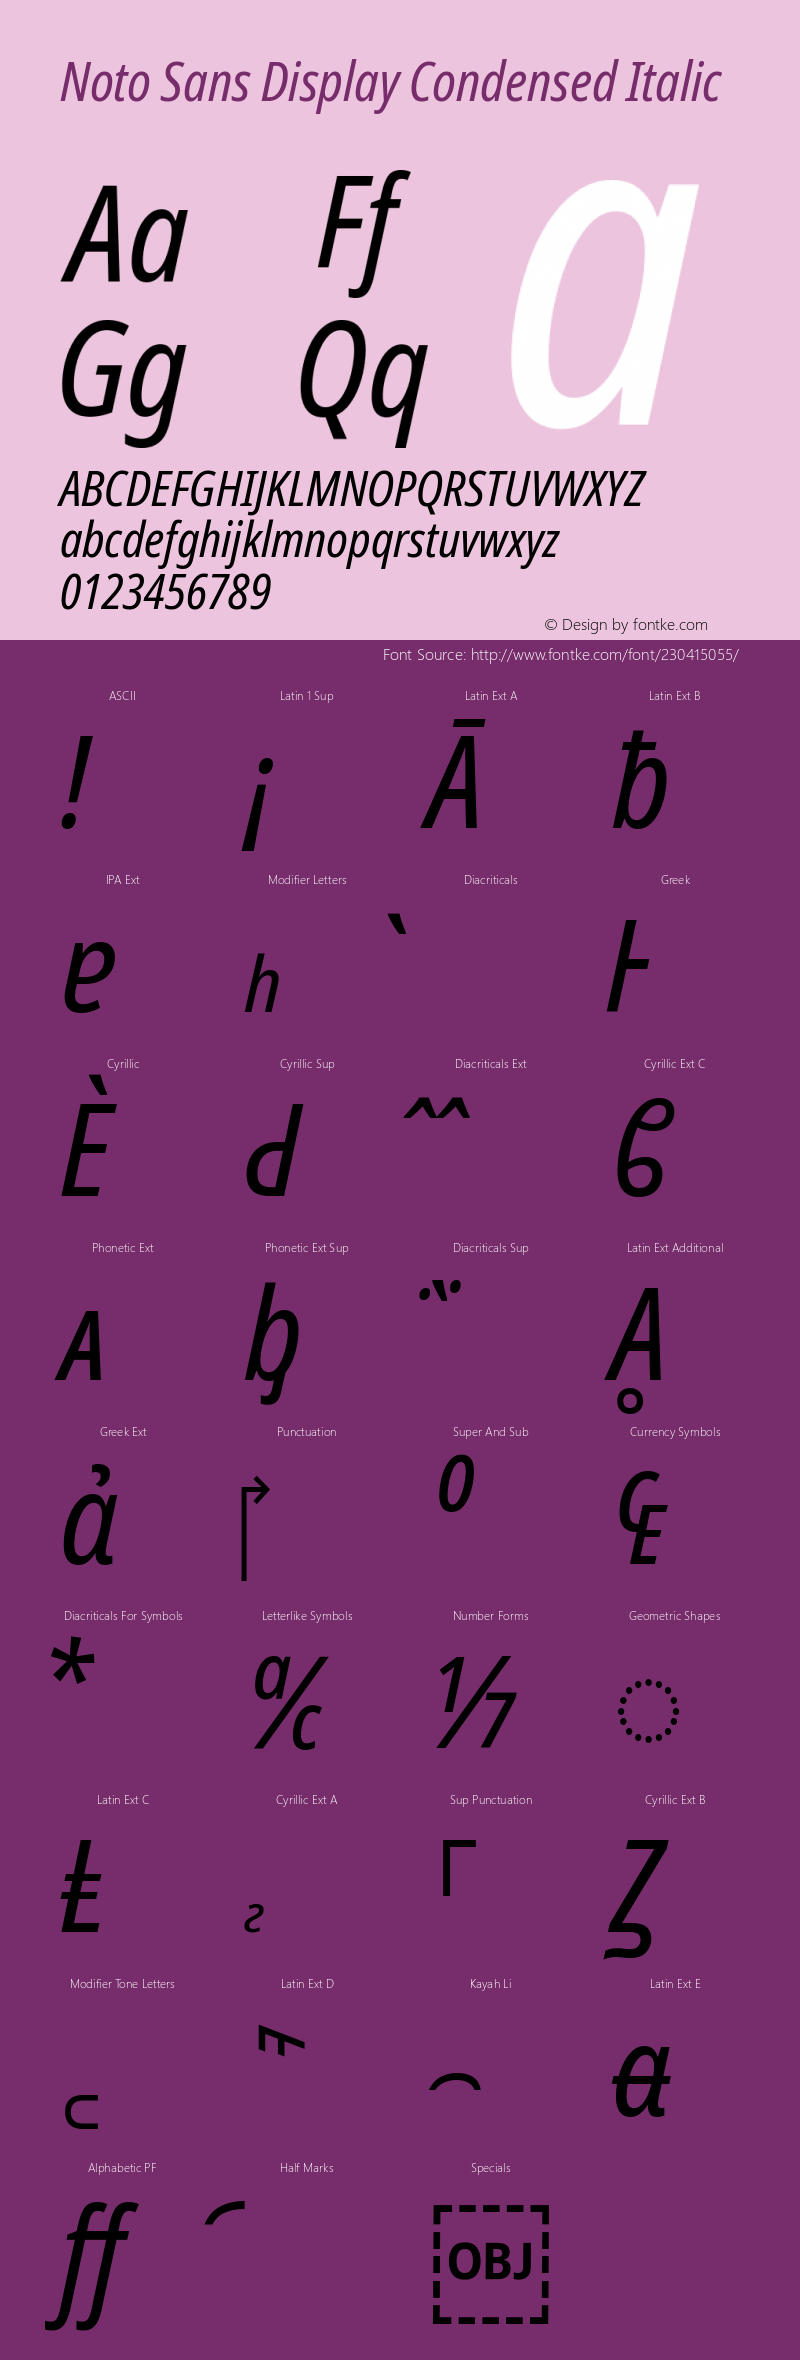 Noto Sans Display Condensed Italic Version 2.007; ttfautohint (v1.8) -l 8 -r 50 -G 200 -x 14 -D latn -f none -a qsq -X 